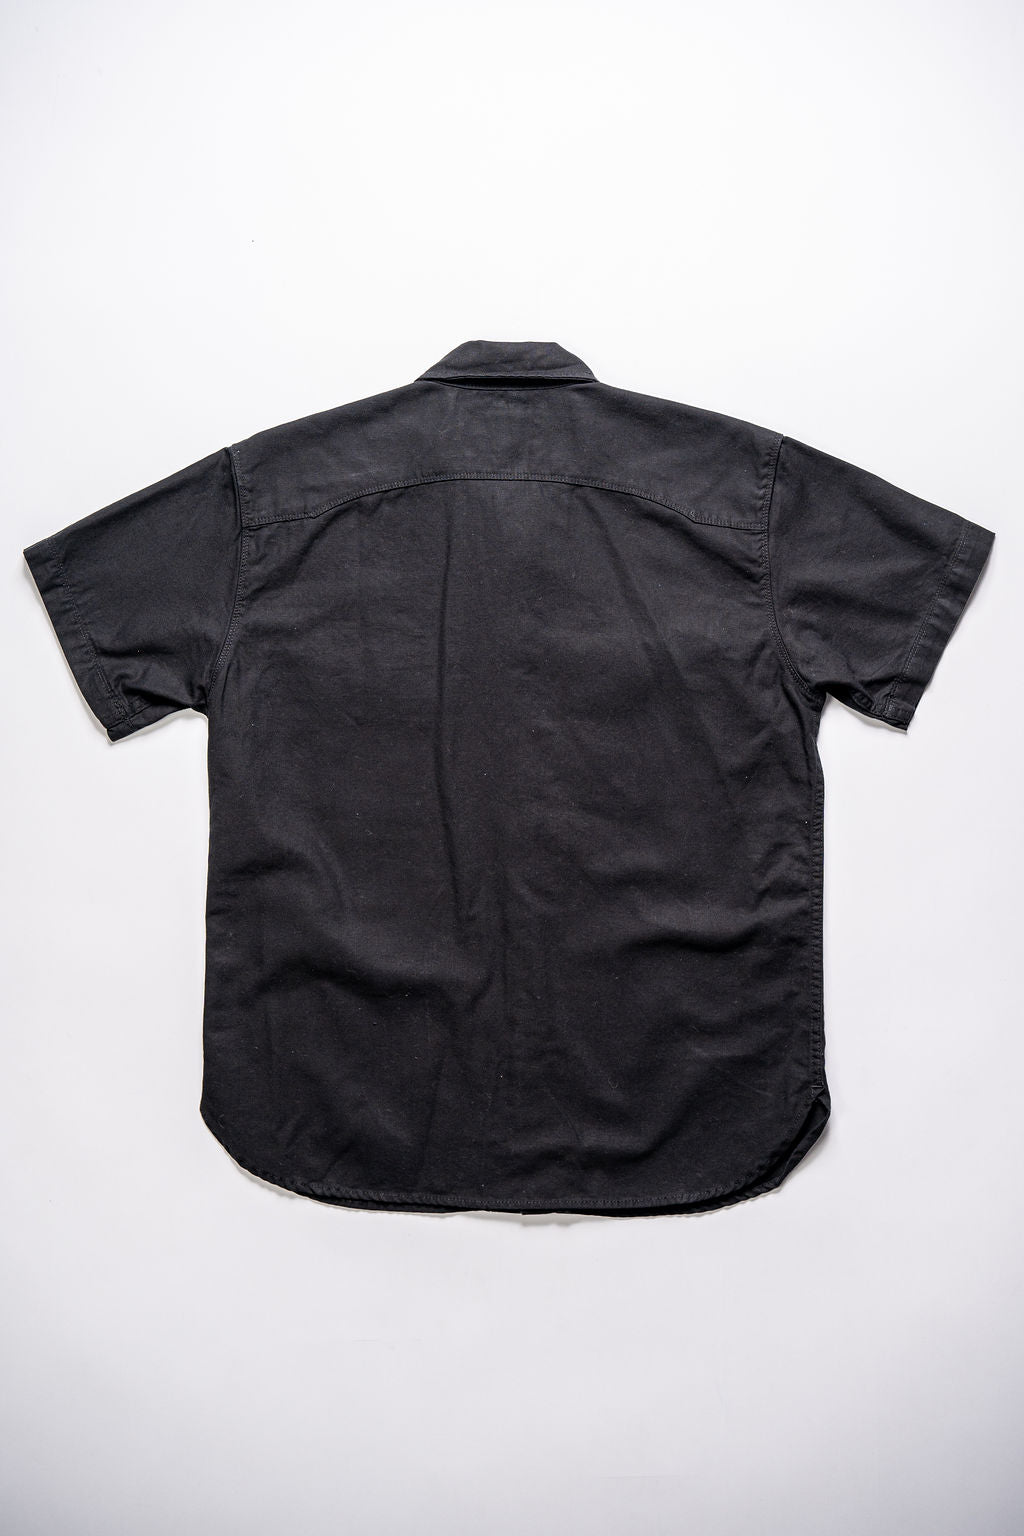 Freenote Cloth Calico S/S - 9oz Black Denim